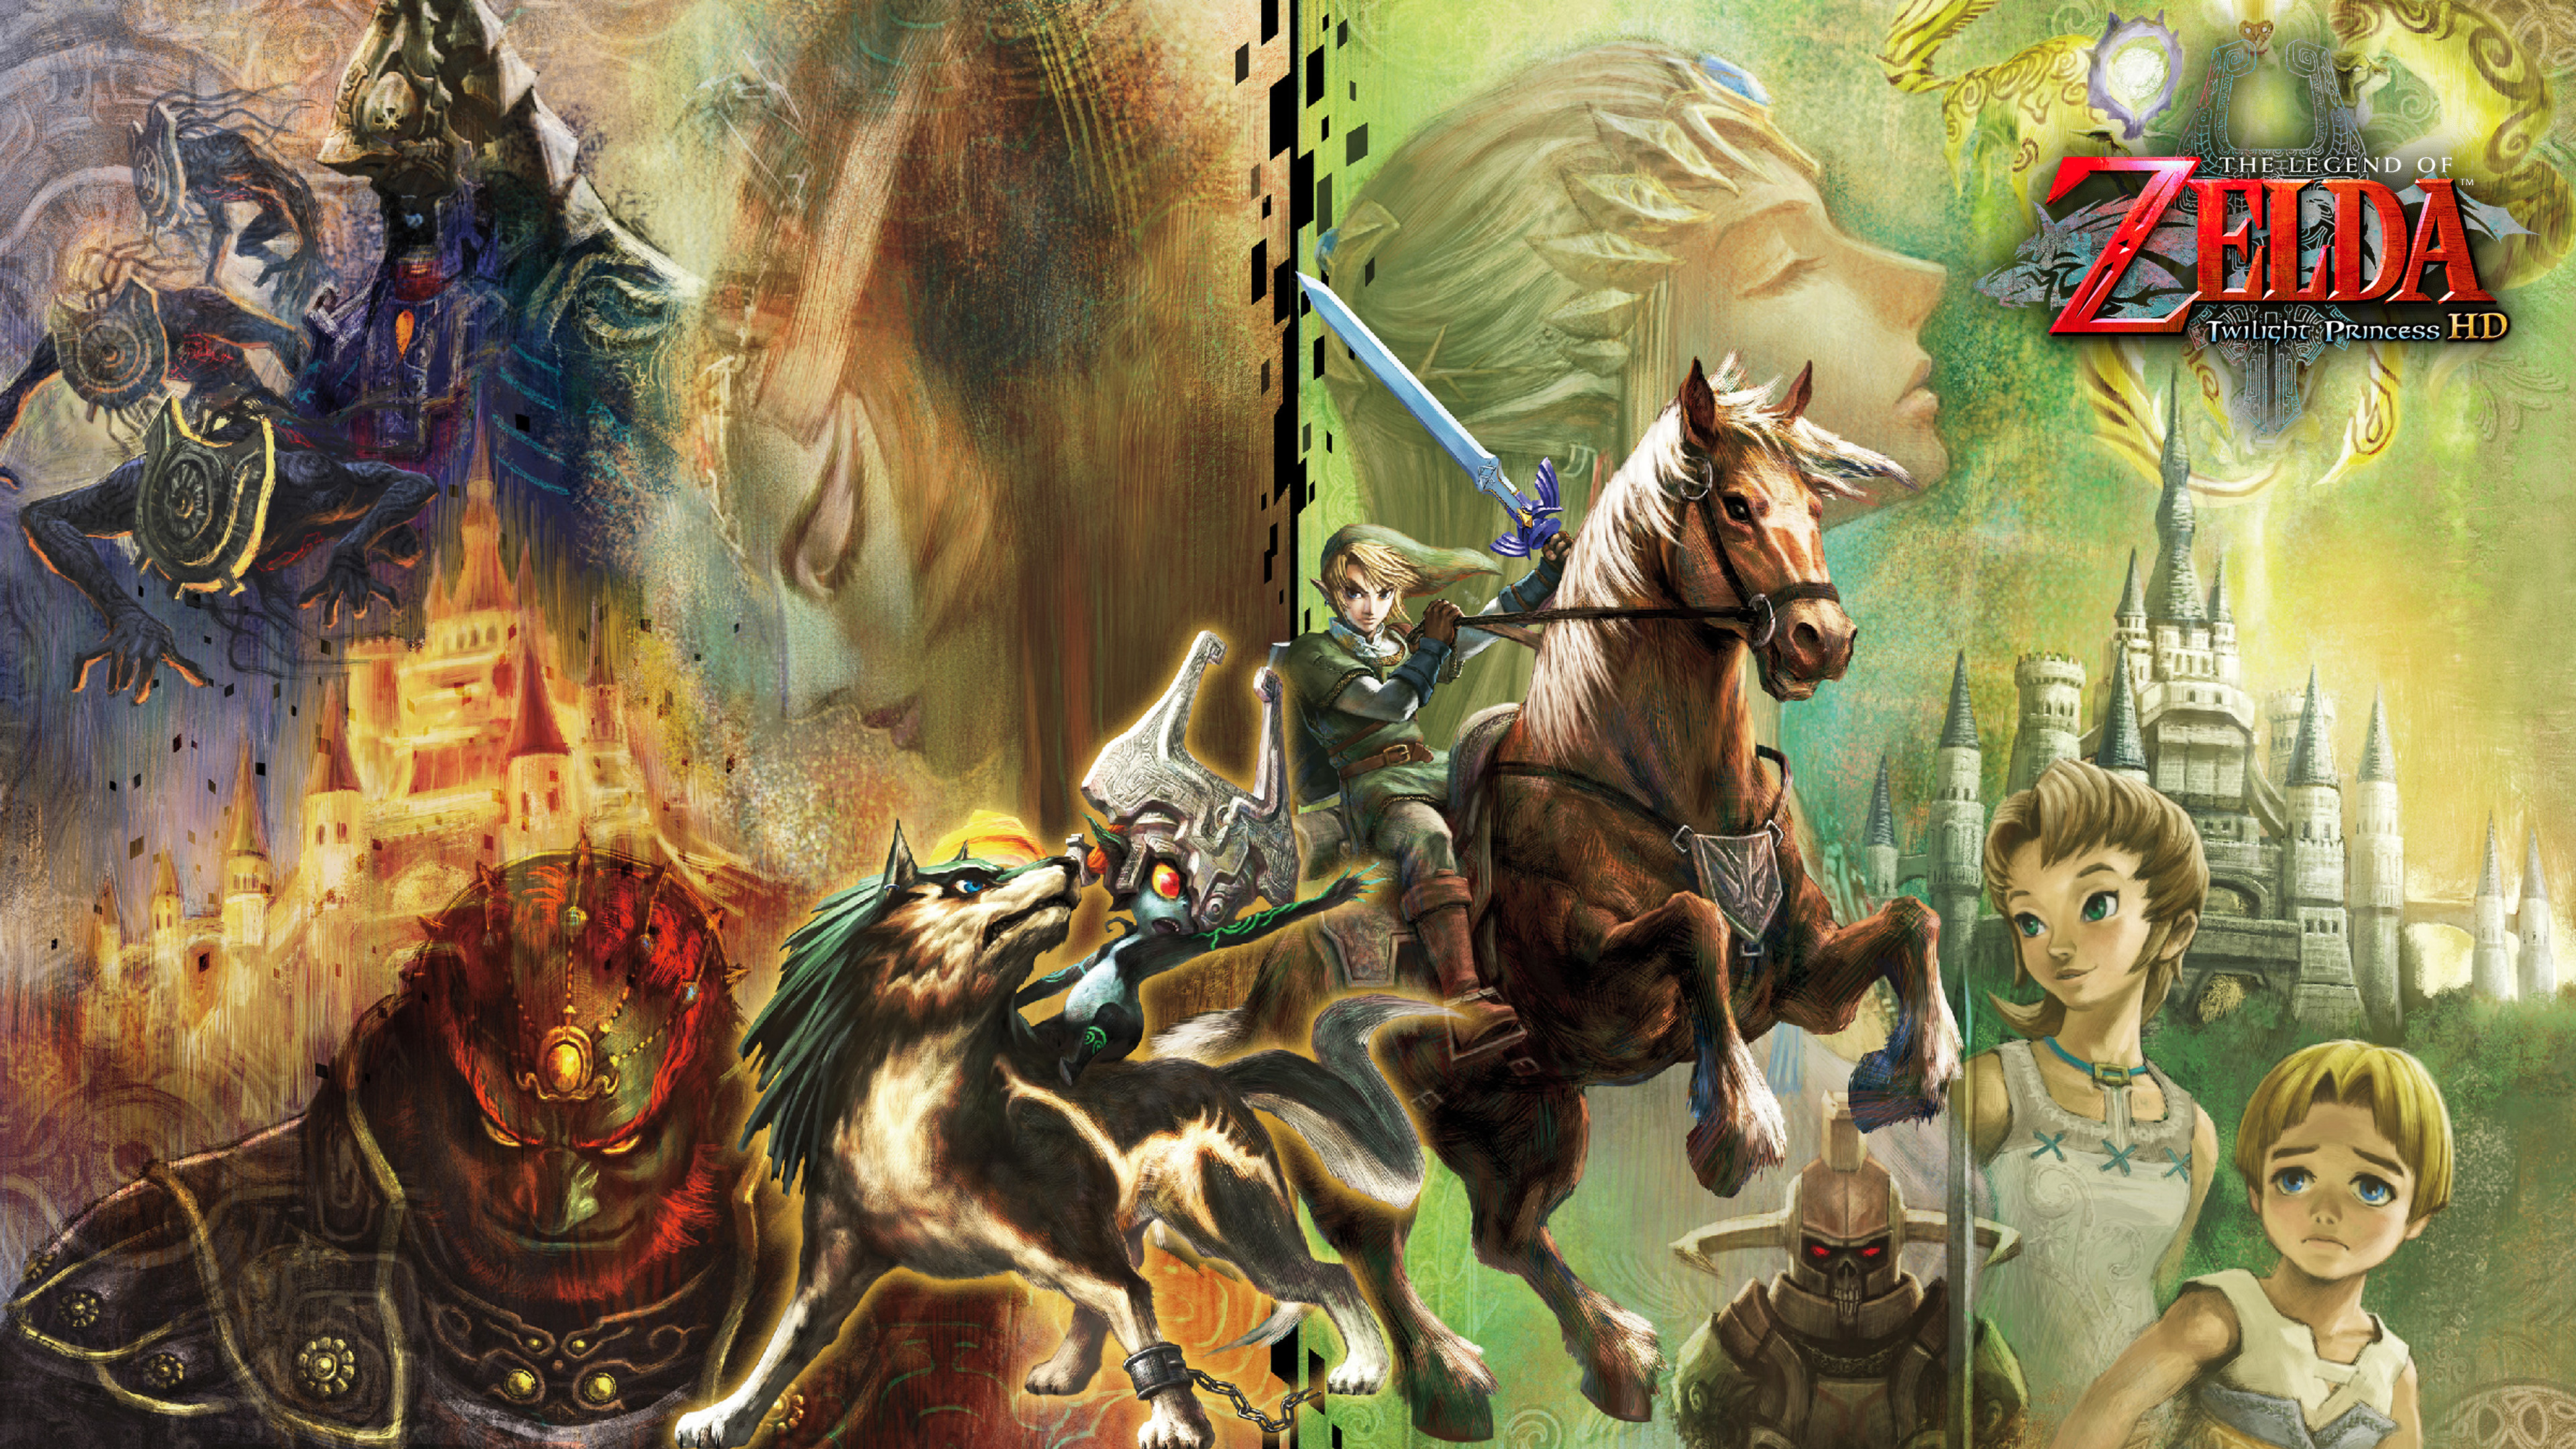 legend of zelda twilight princess wallpaper,action adventure game,strategy video game,mythology,games,adventure game